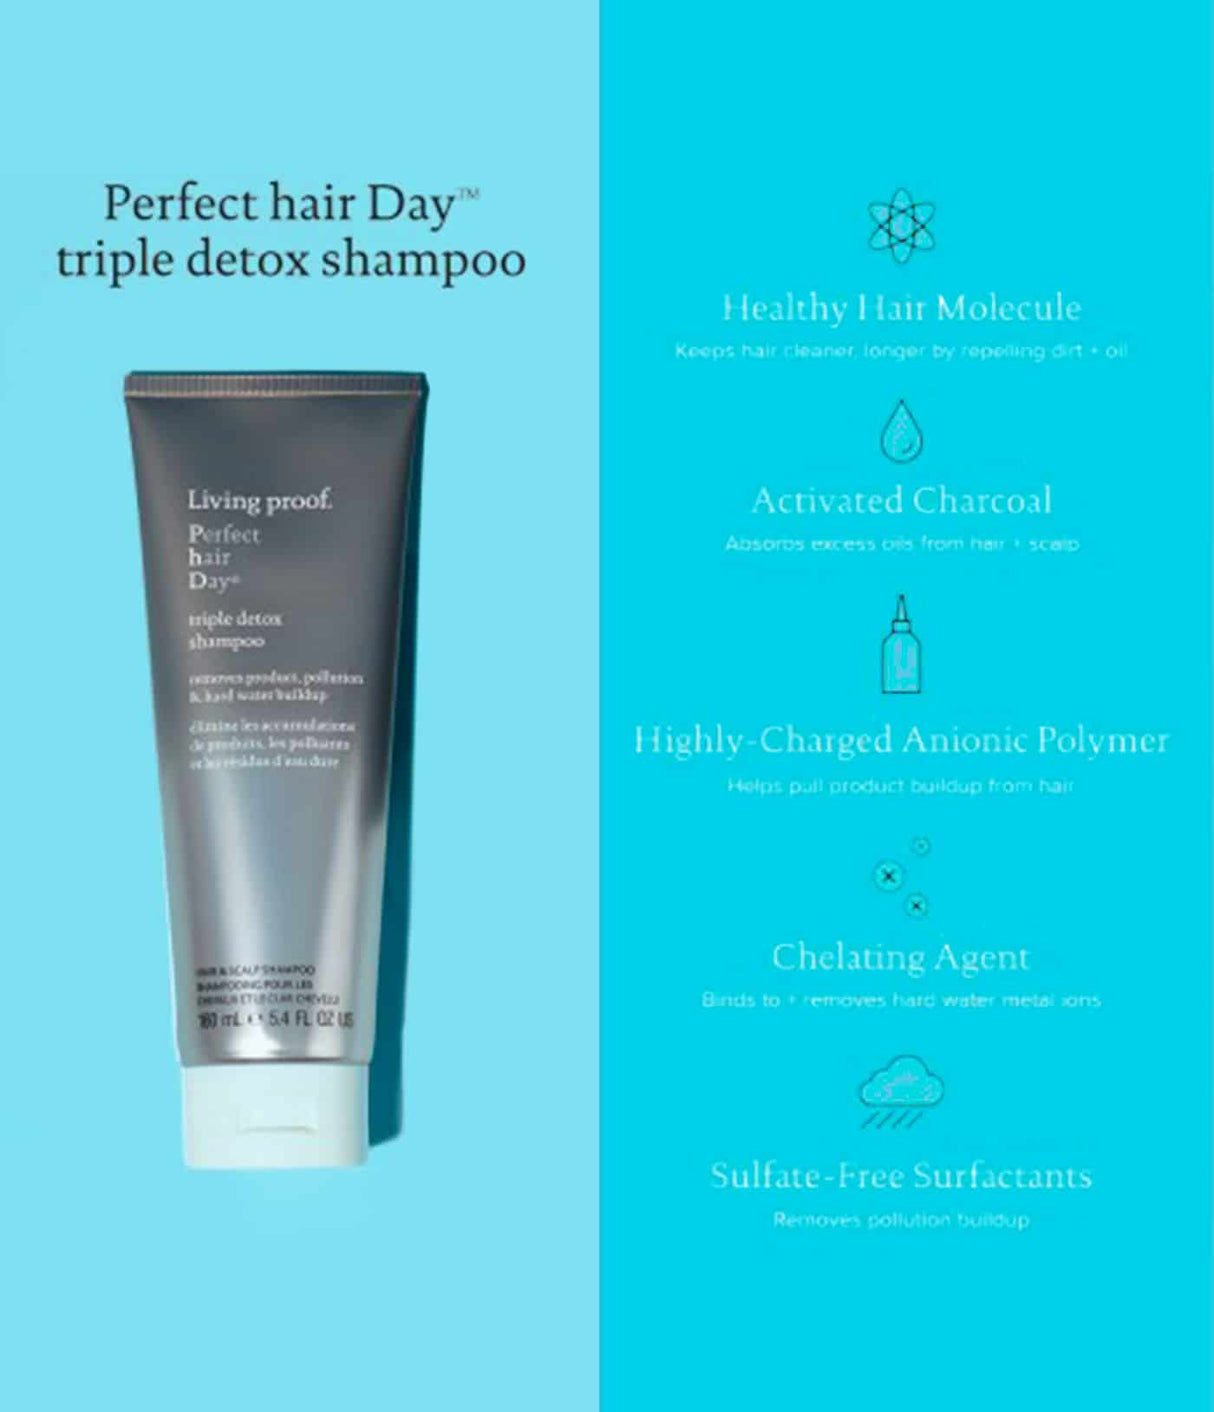 Perfect Hair Day Triple Detox Shampoo de Living Proof